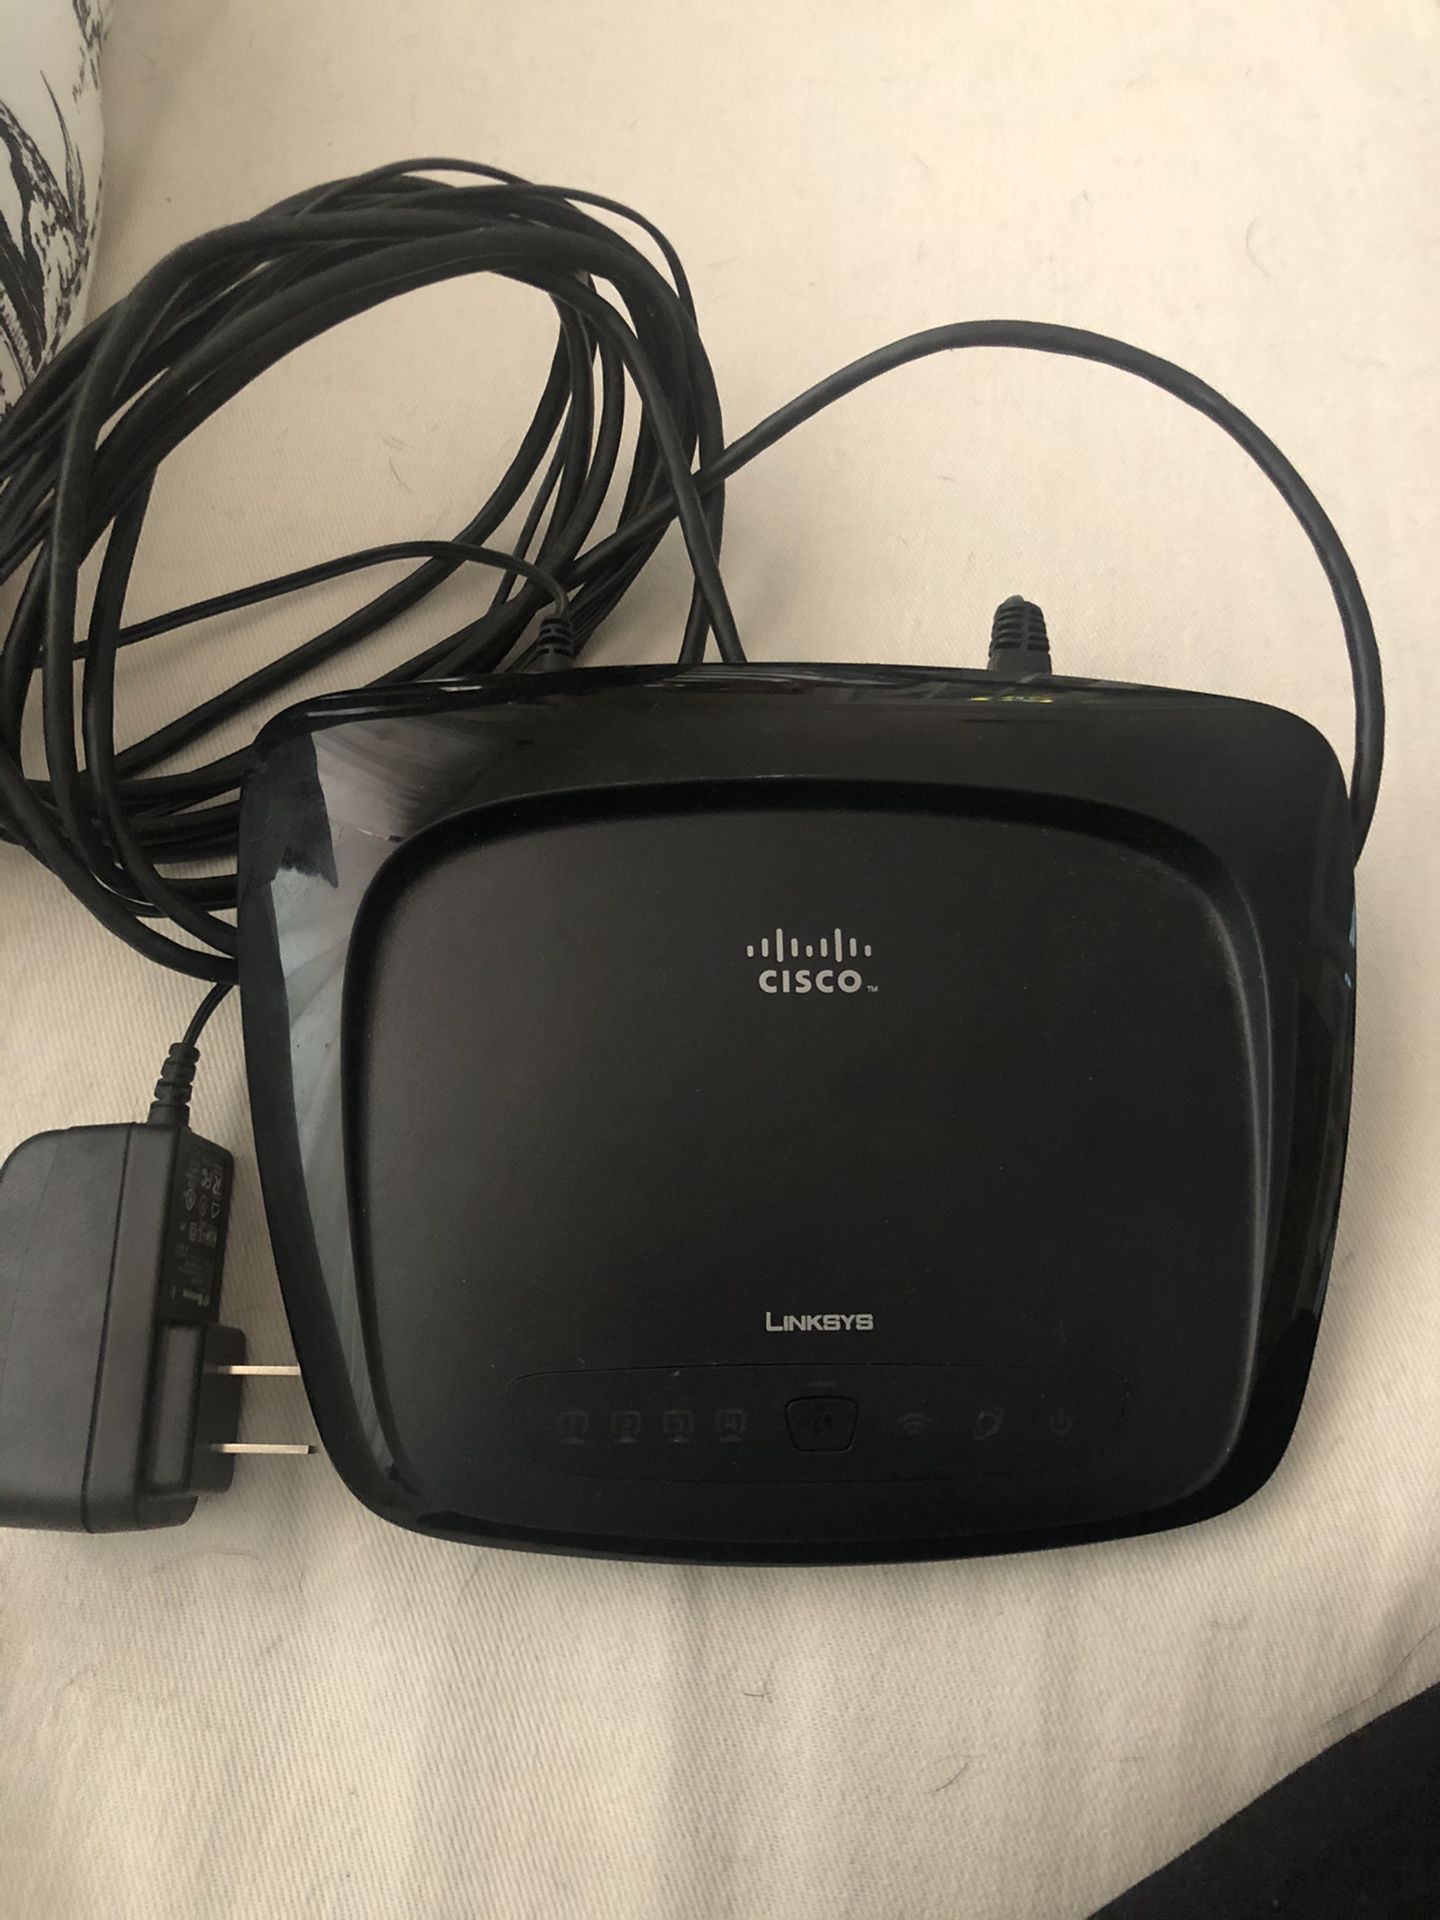 Cisco Linksys Wireless Broadband Router